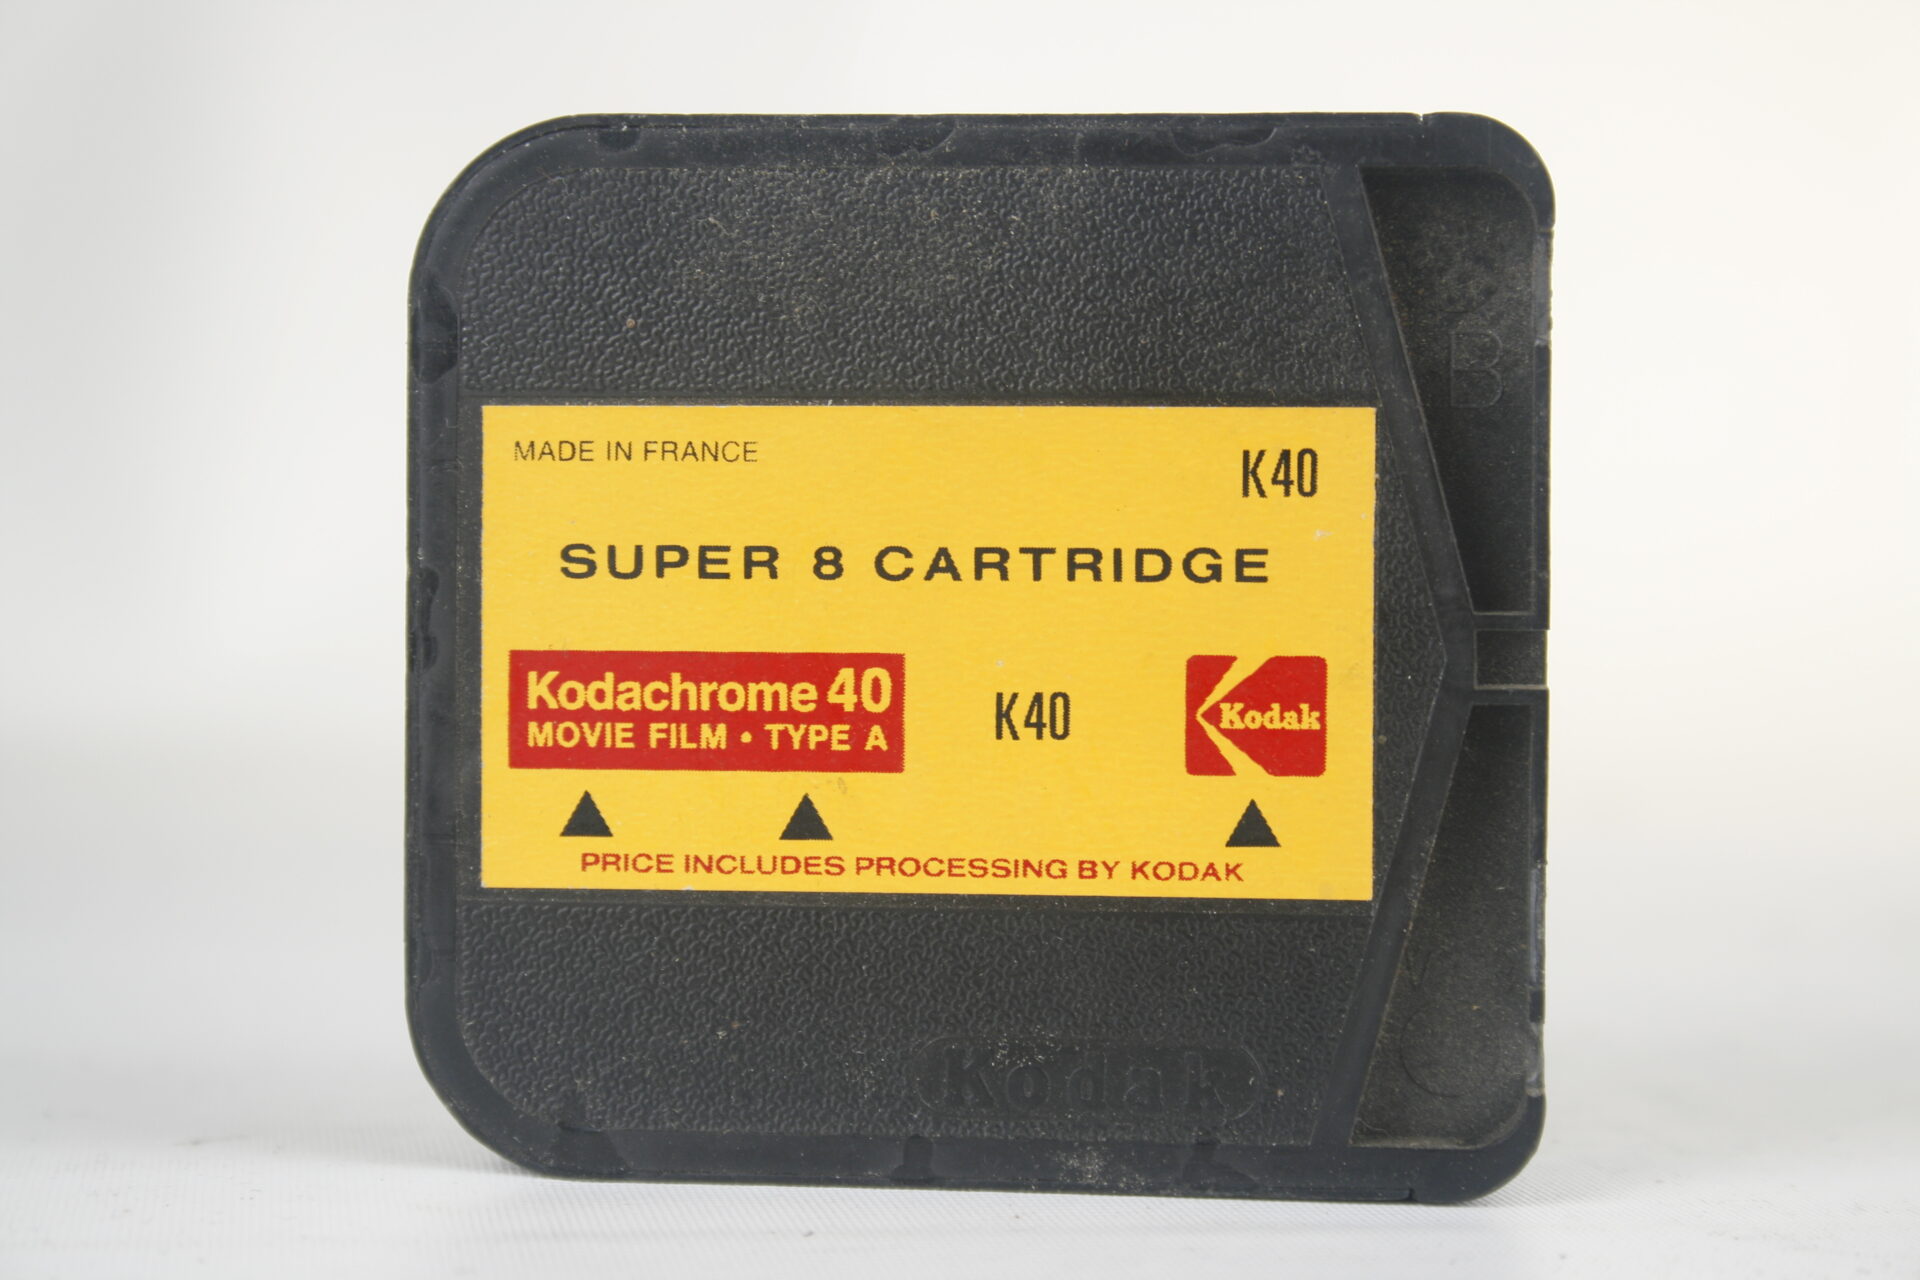 Kodak Kodachrome super 8 cartridge. K40 film. Type A.